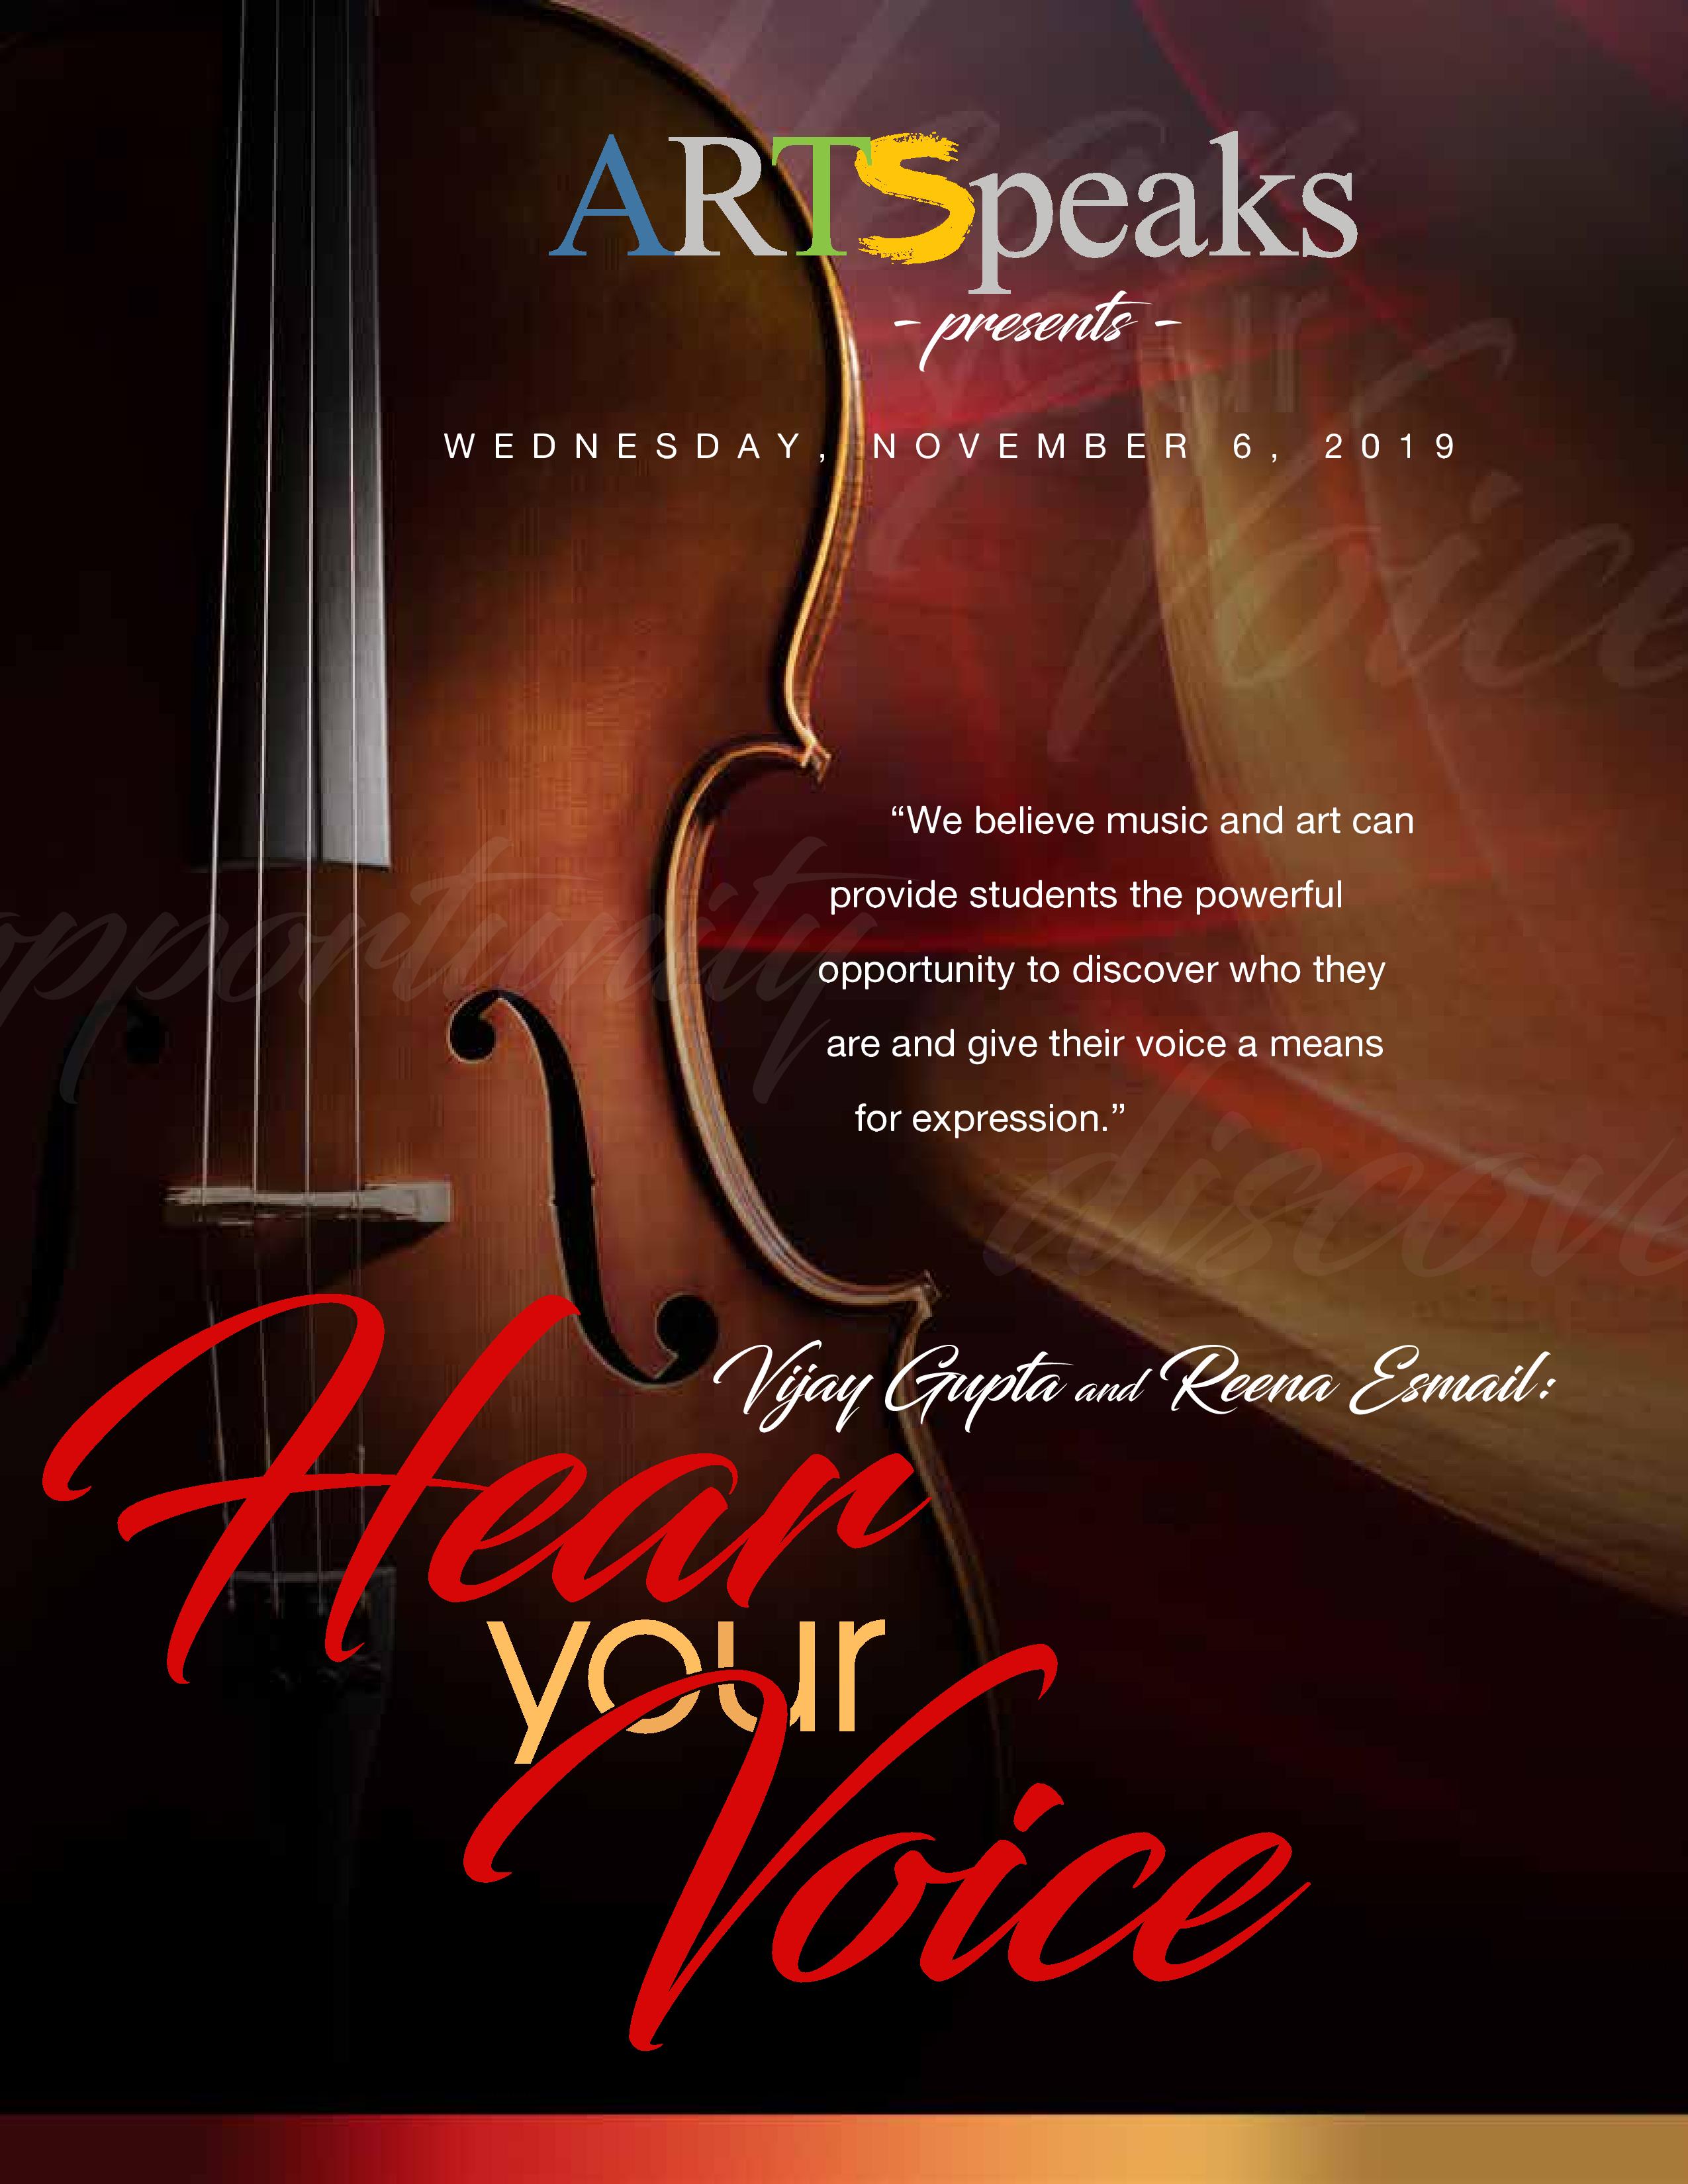 ArtSpeaks Presents "Hear Your Voice"